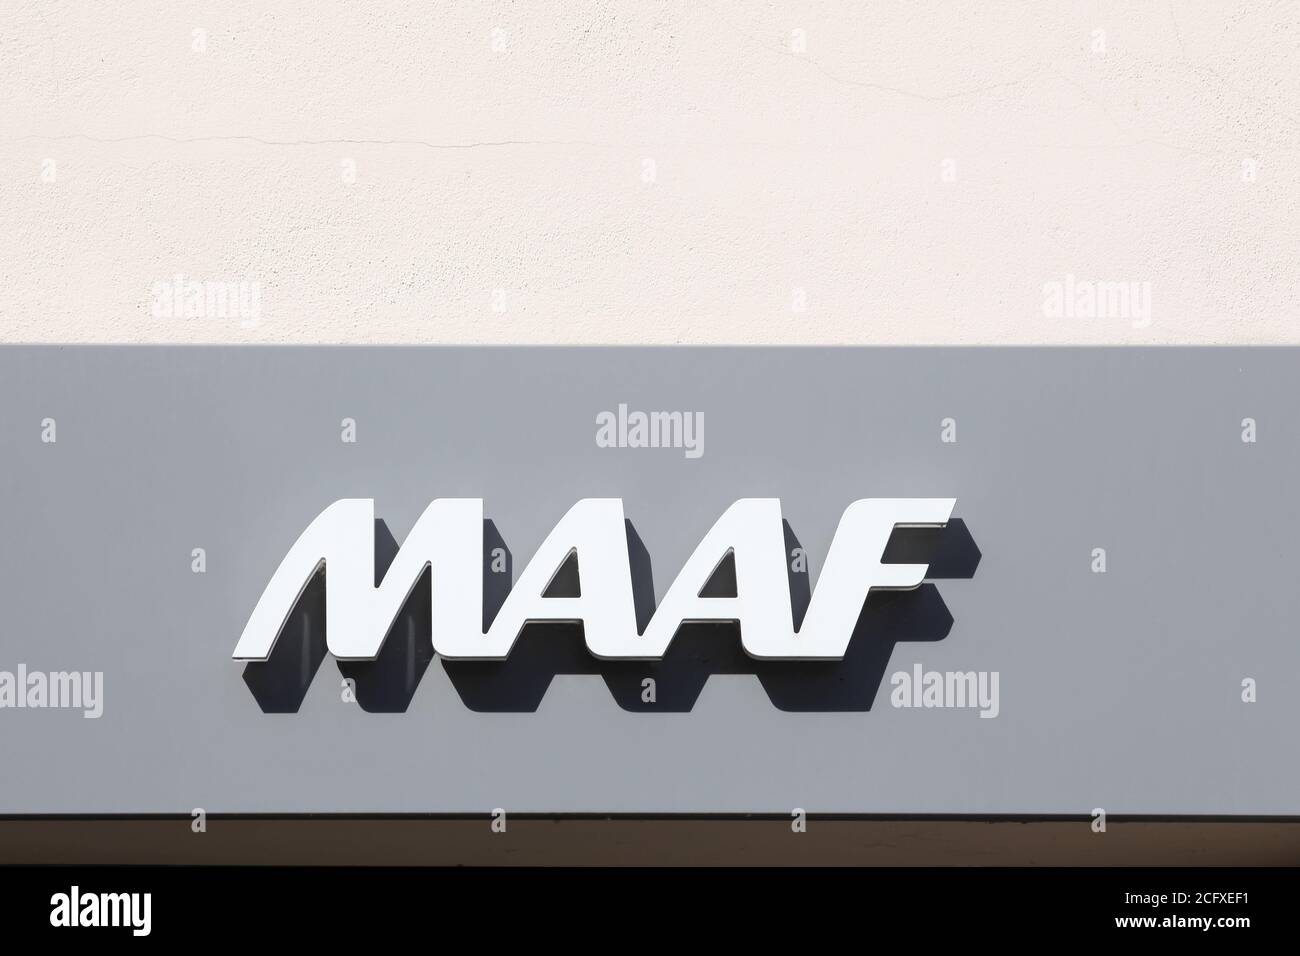 L'Arbresle, France - June 27, 2020: MAAF assurances logo on a wall. MAAF Assurances is a French mutual insurance company Stock Photo